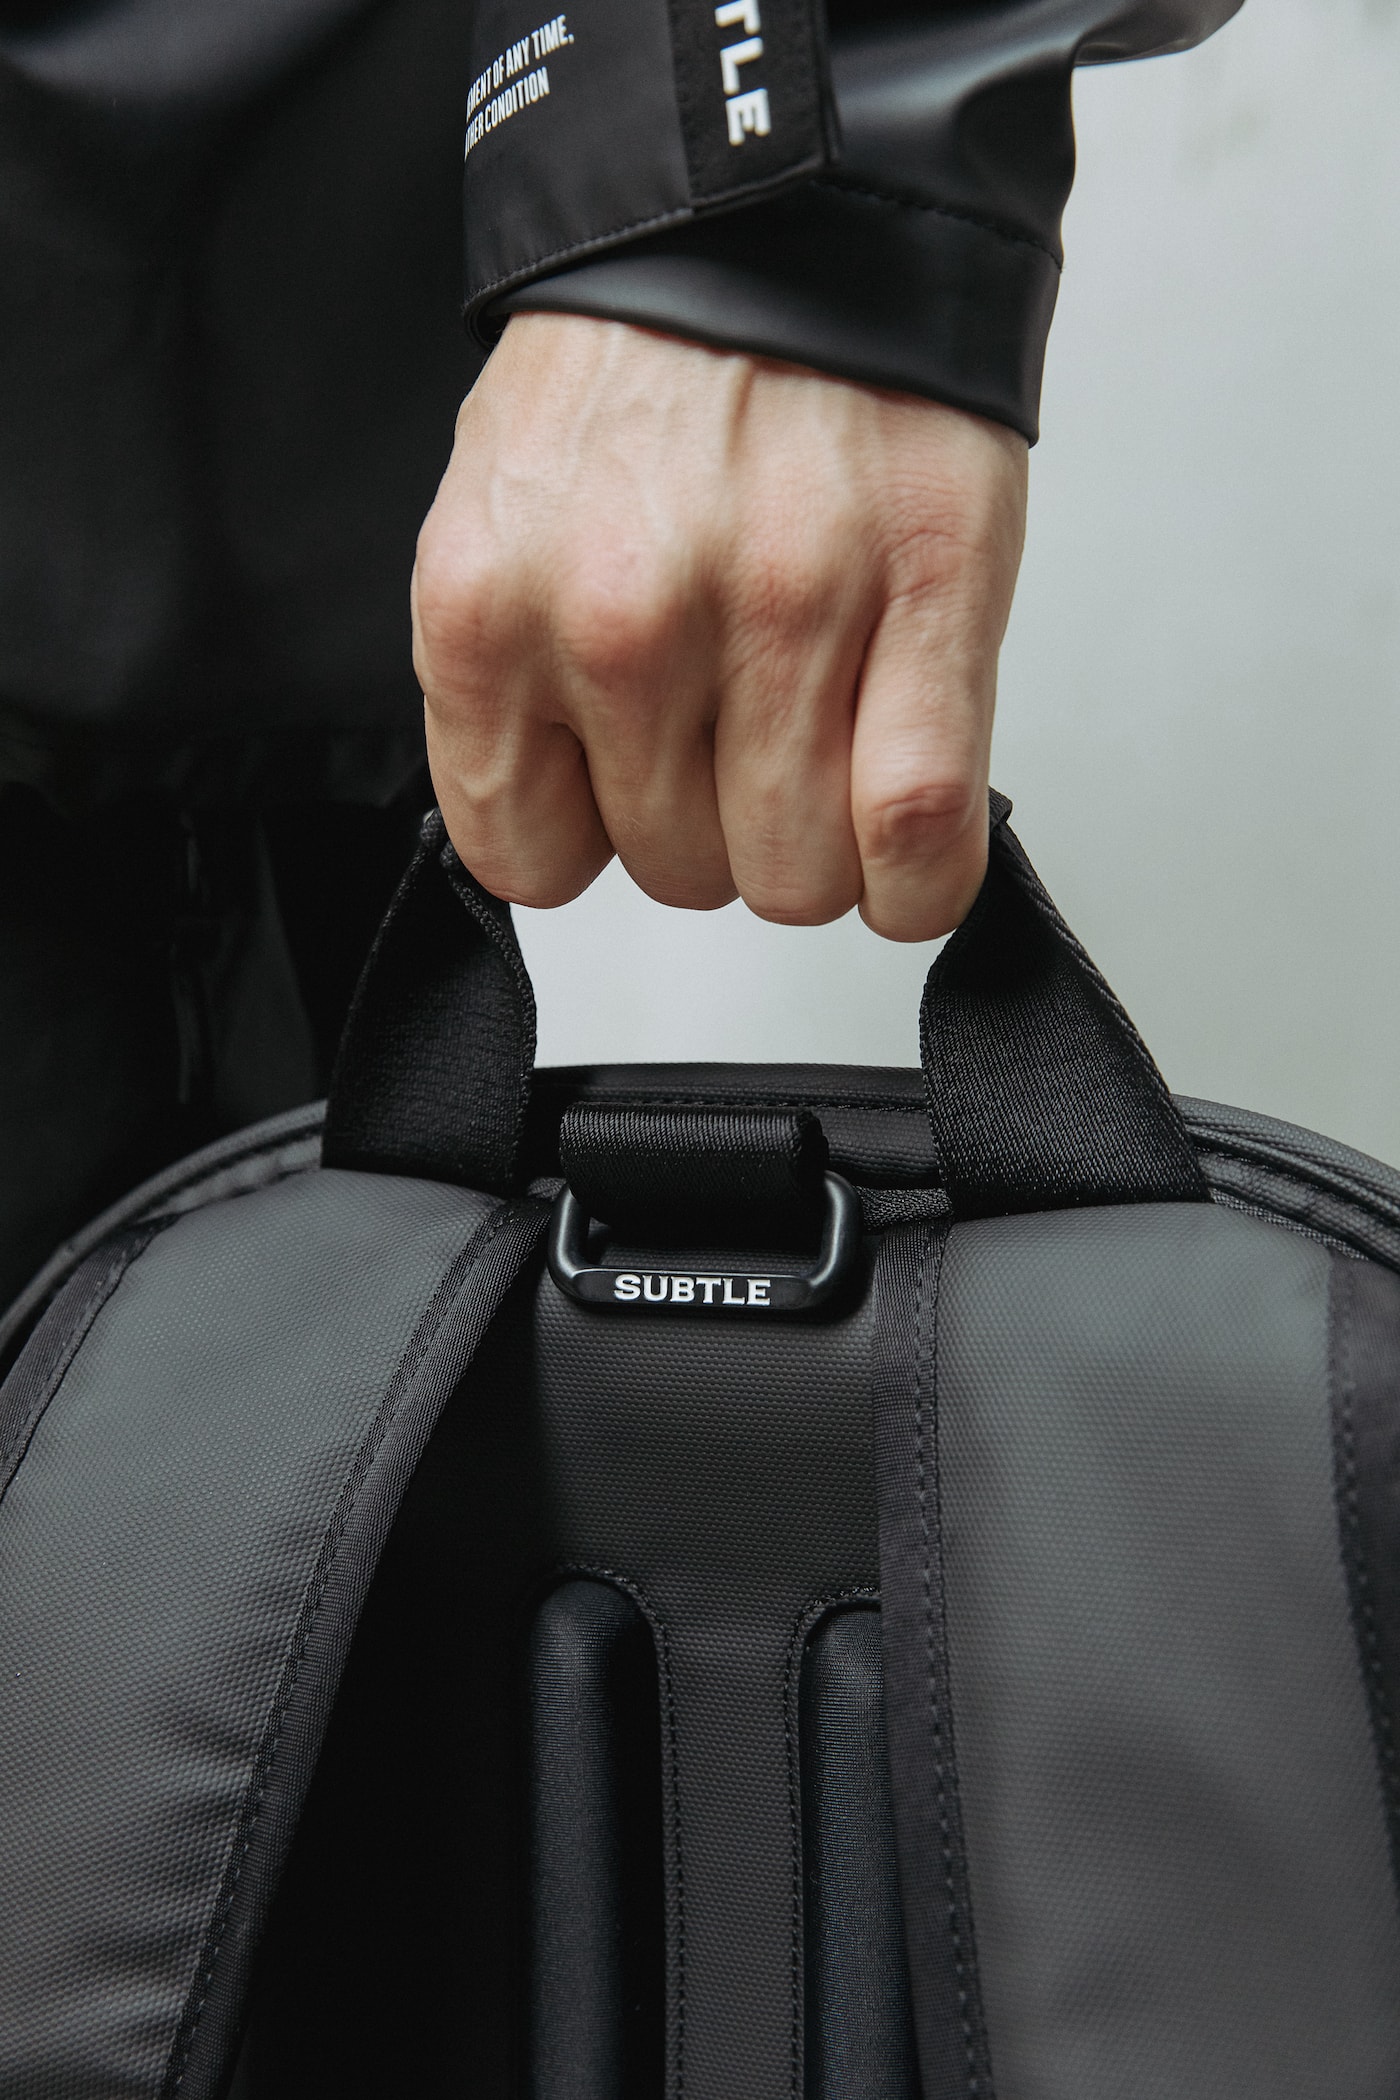 SUBTLE 推出全新 MAINSTREET 系列机能包袋单品